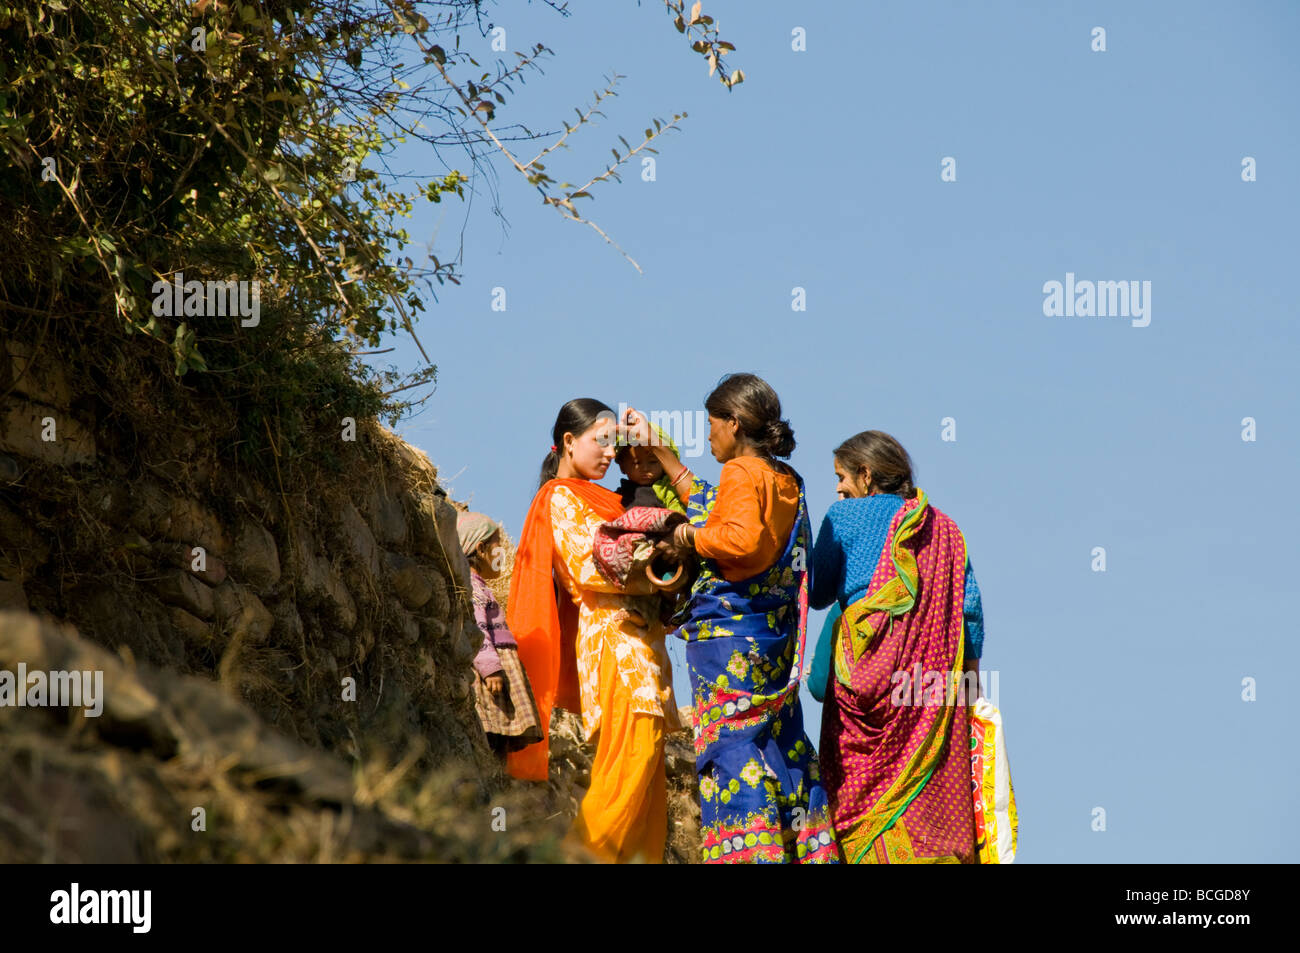 Villagerskumaon Villageslower Himalayasterracescountryside Uttaranchal North East India 